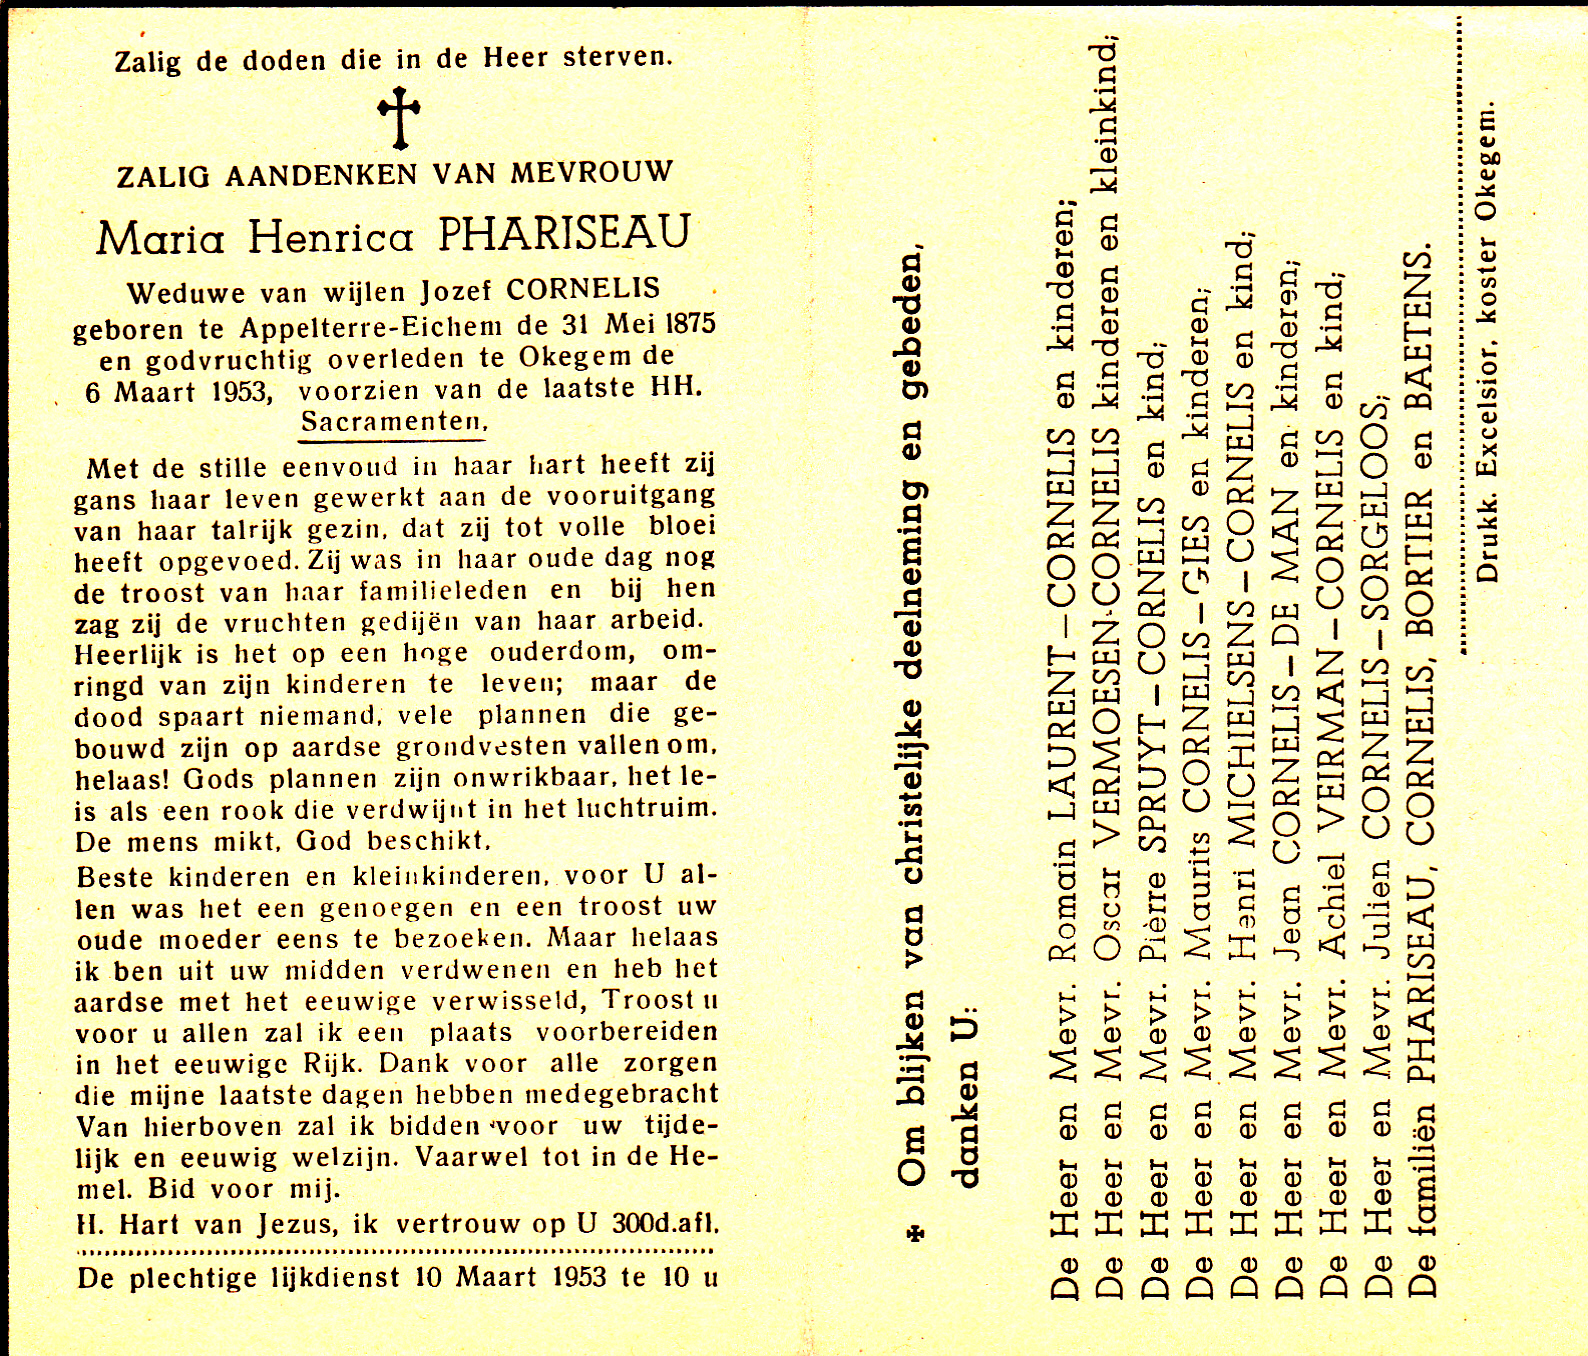 Phariseau Maria Henrica